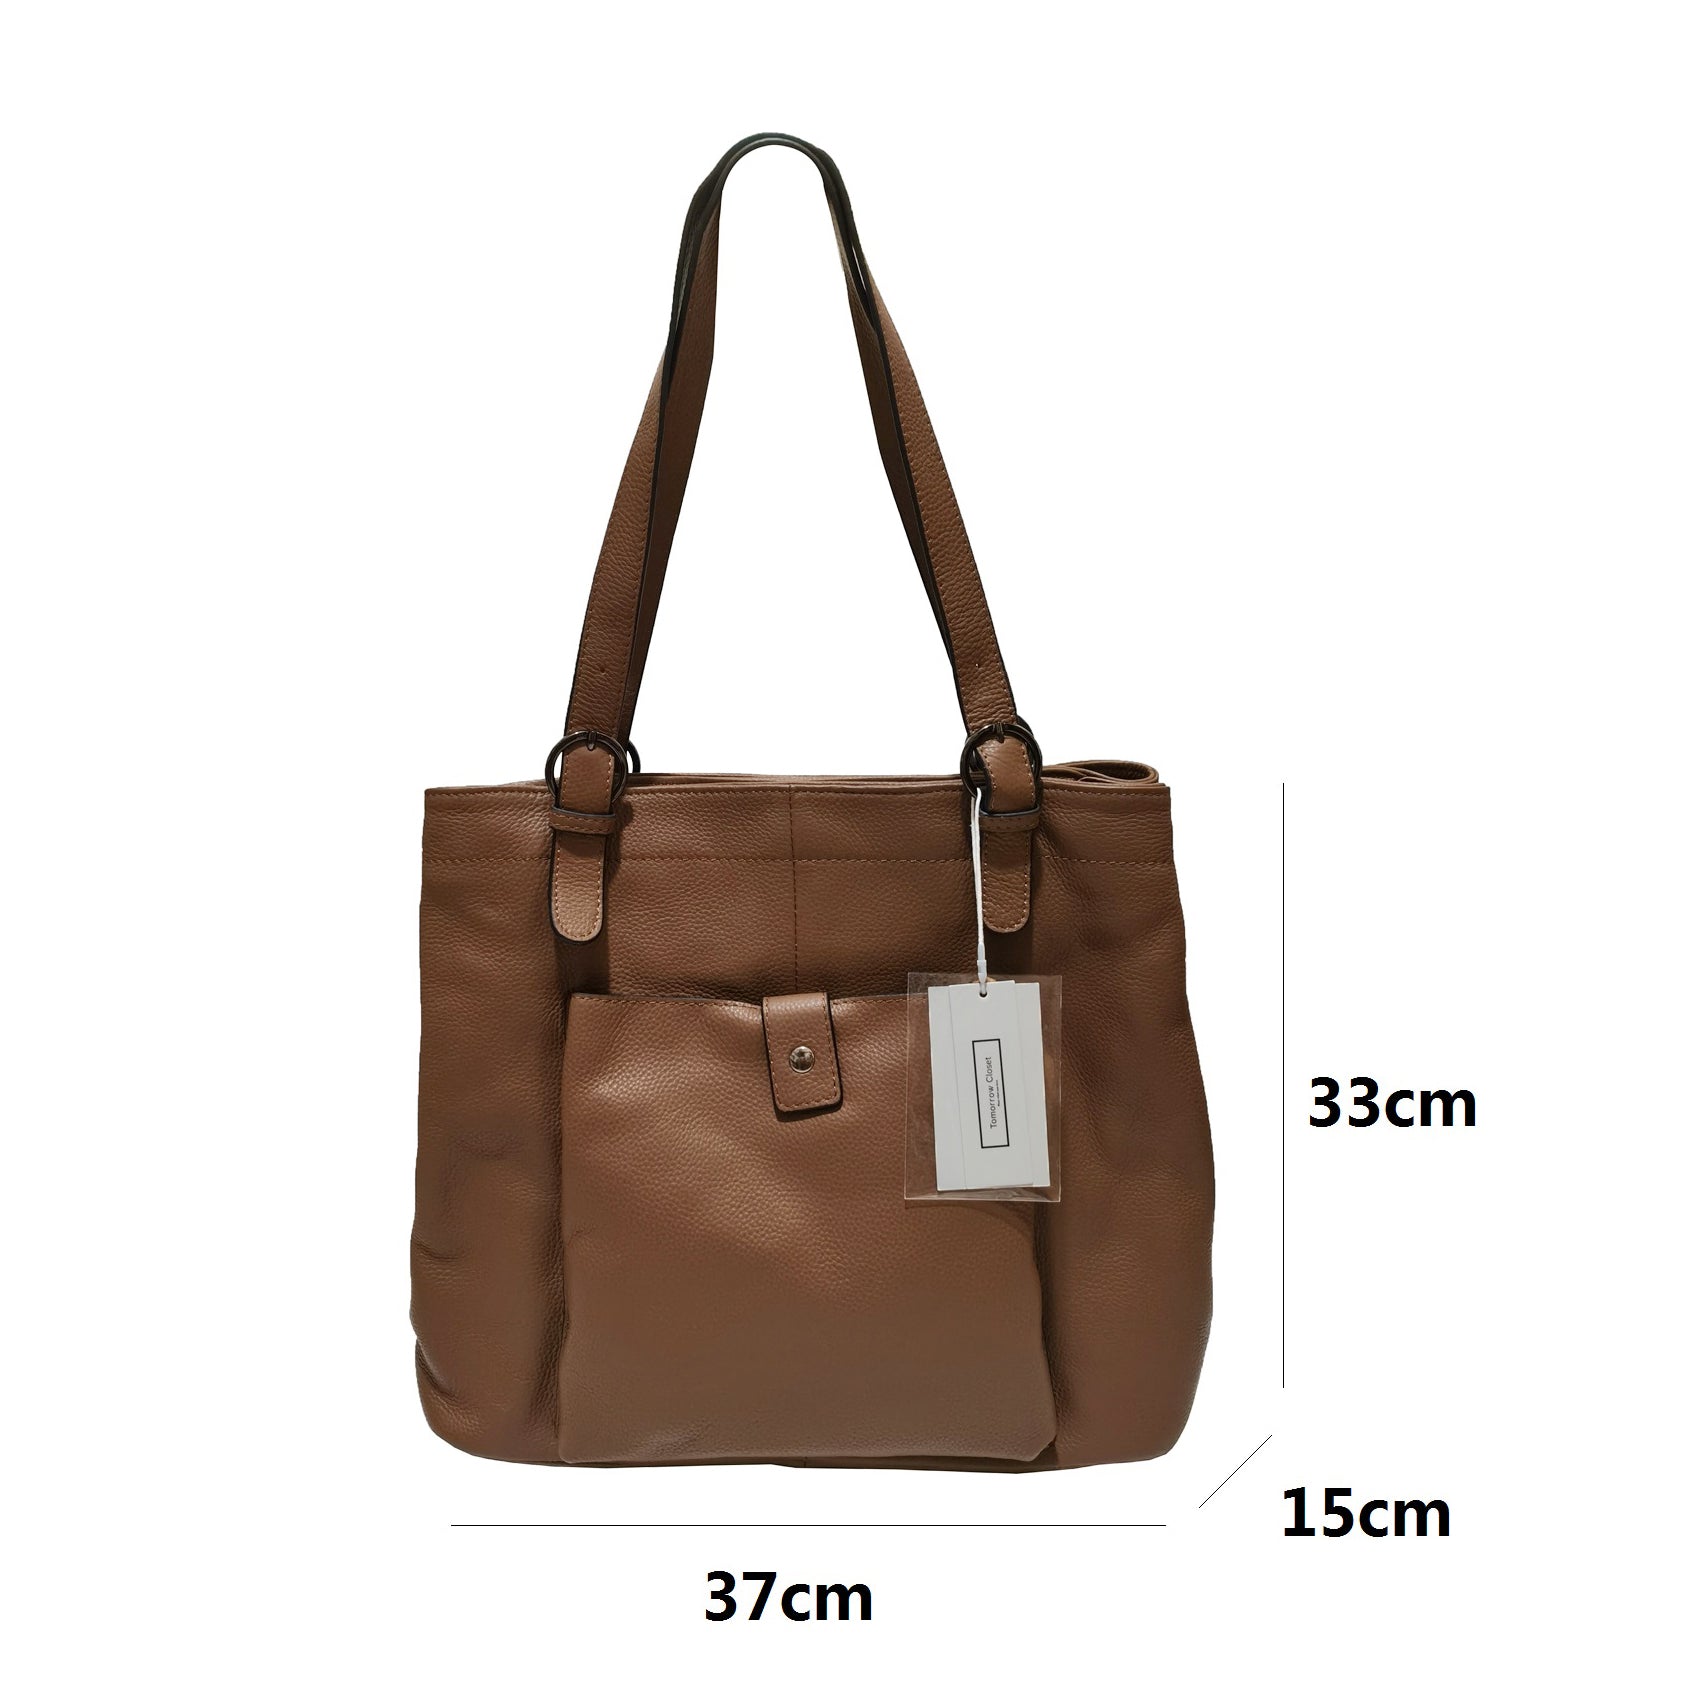 Women's genuine cowhide leather handbag Cara design by Tomorrow Closet